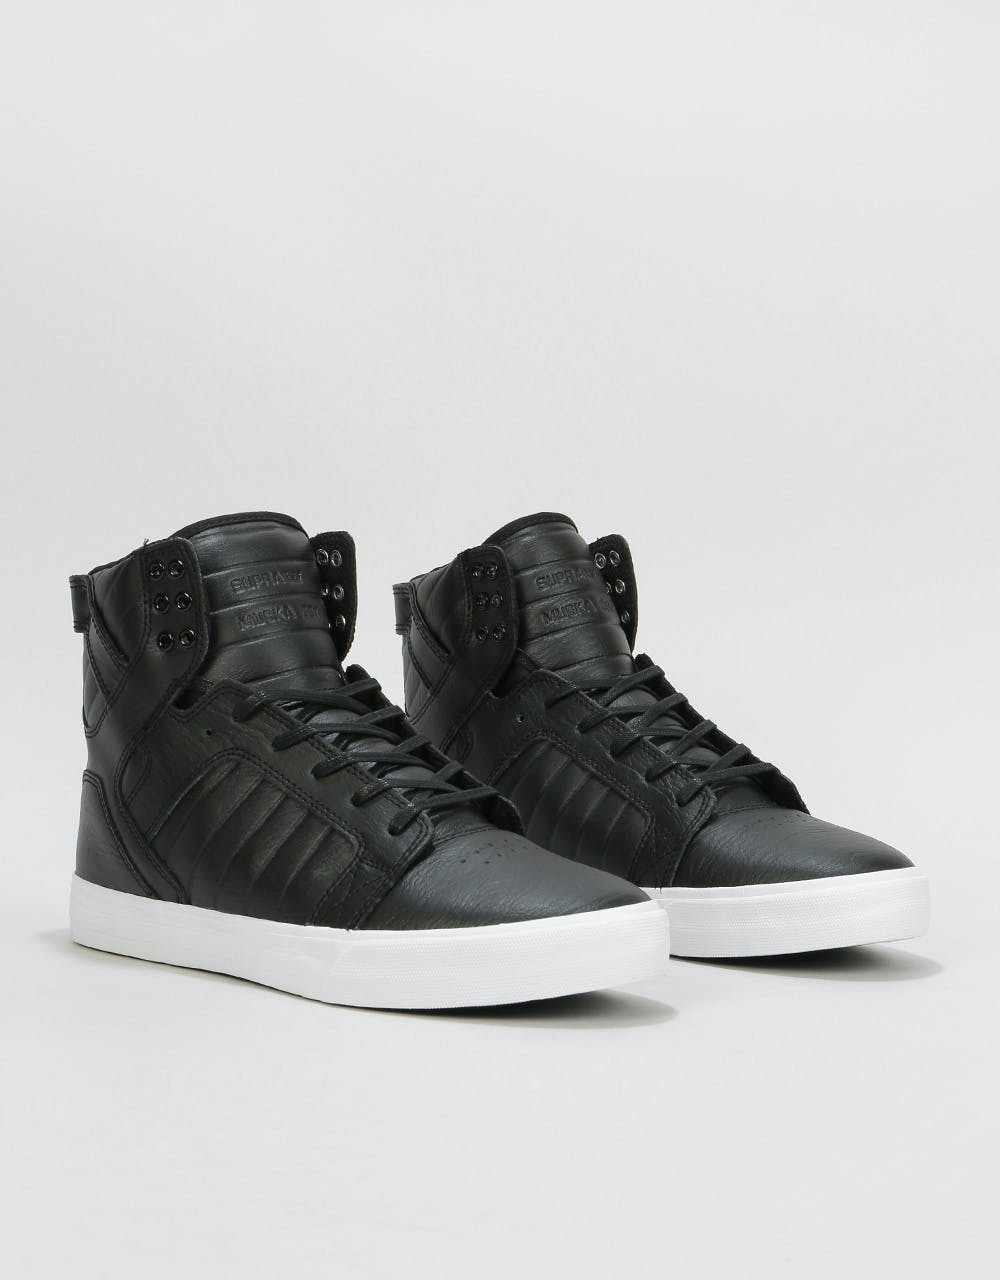 Supra Skytop Skate Shoes - Black/White